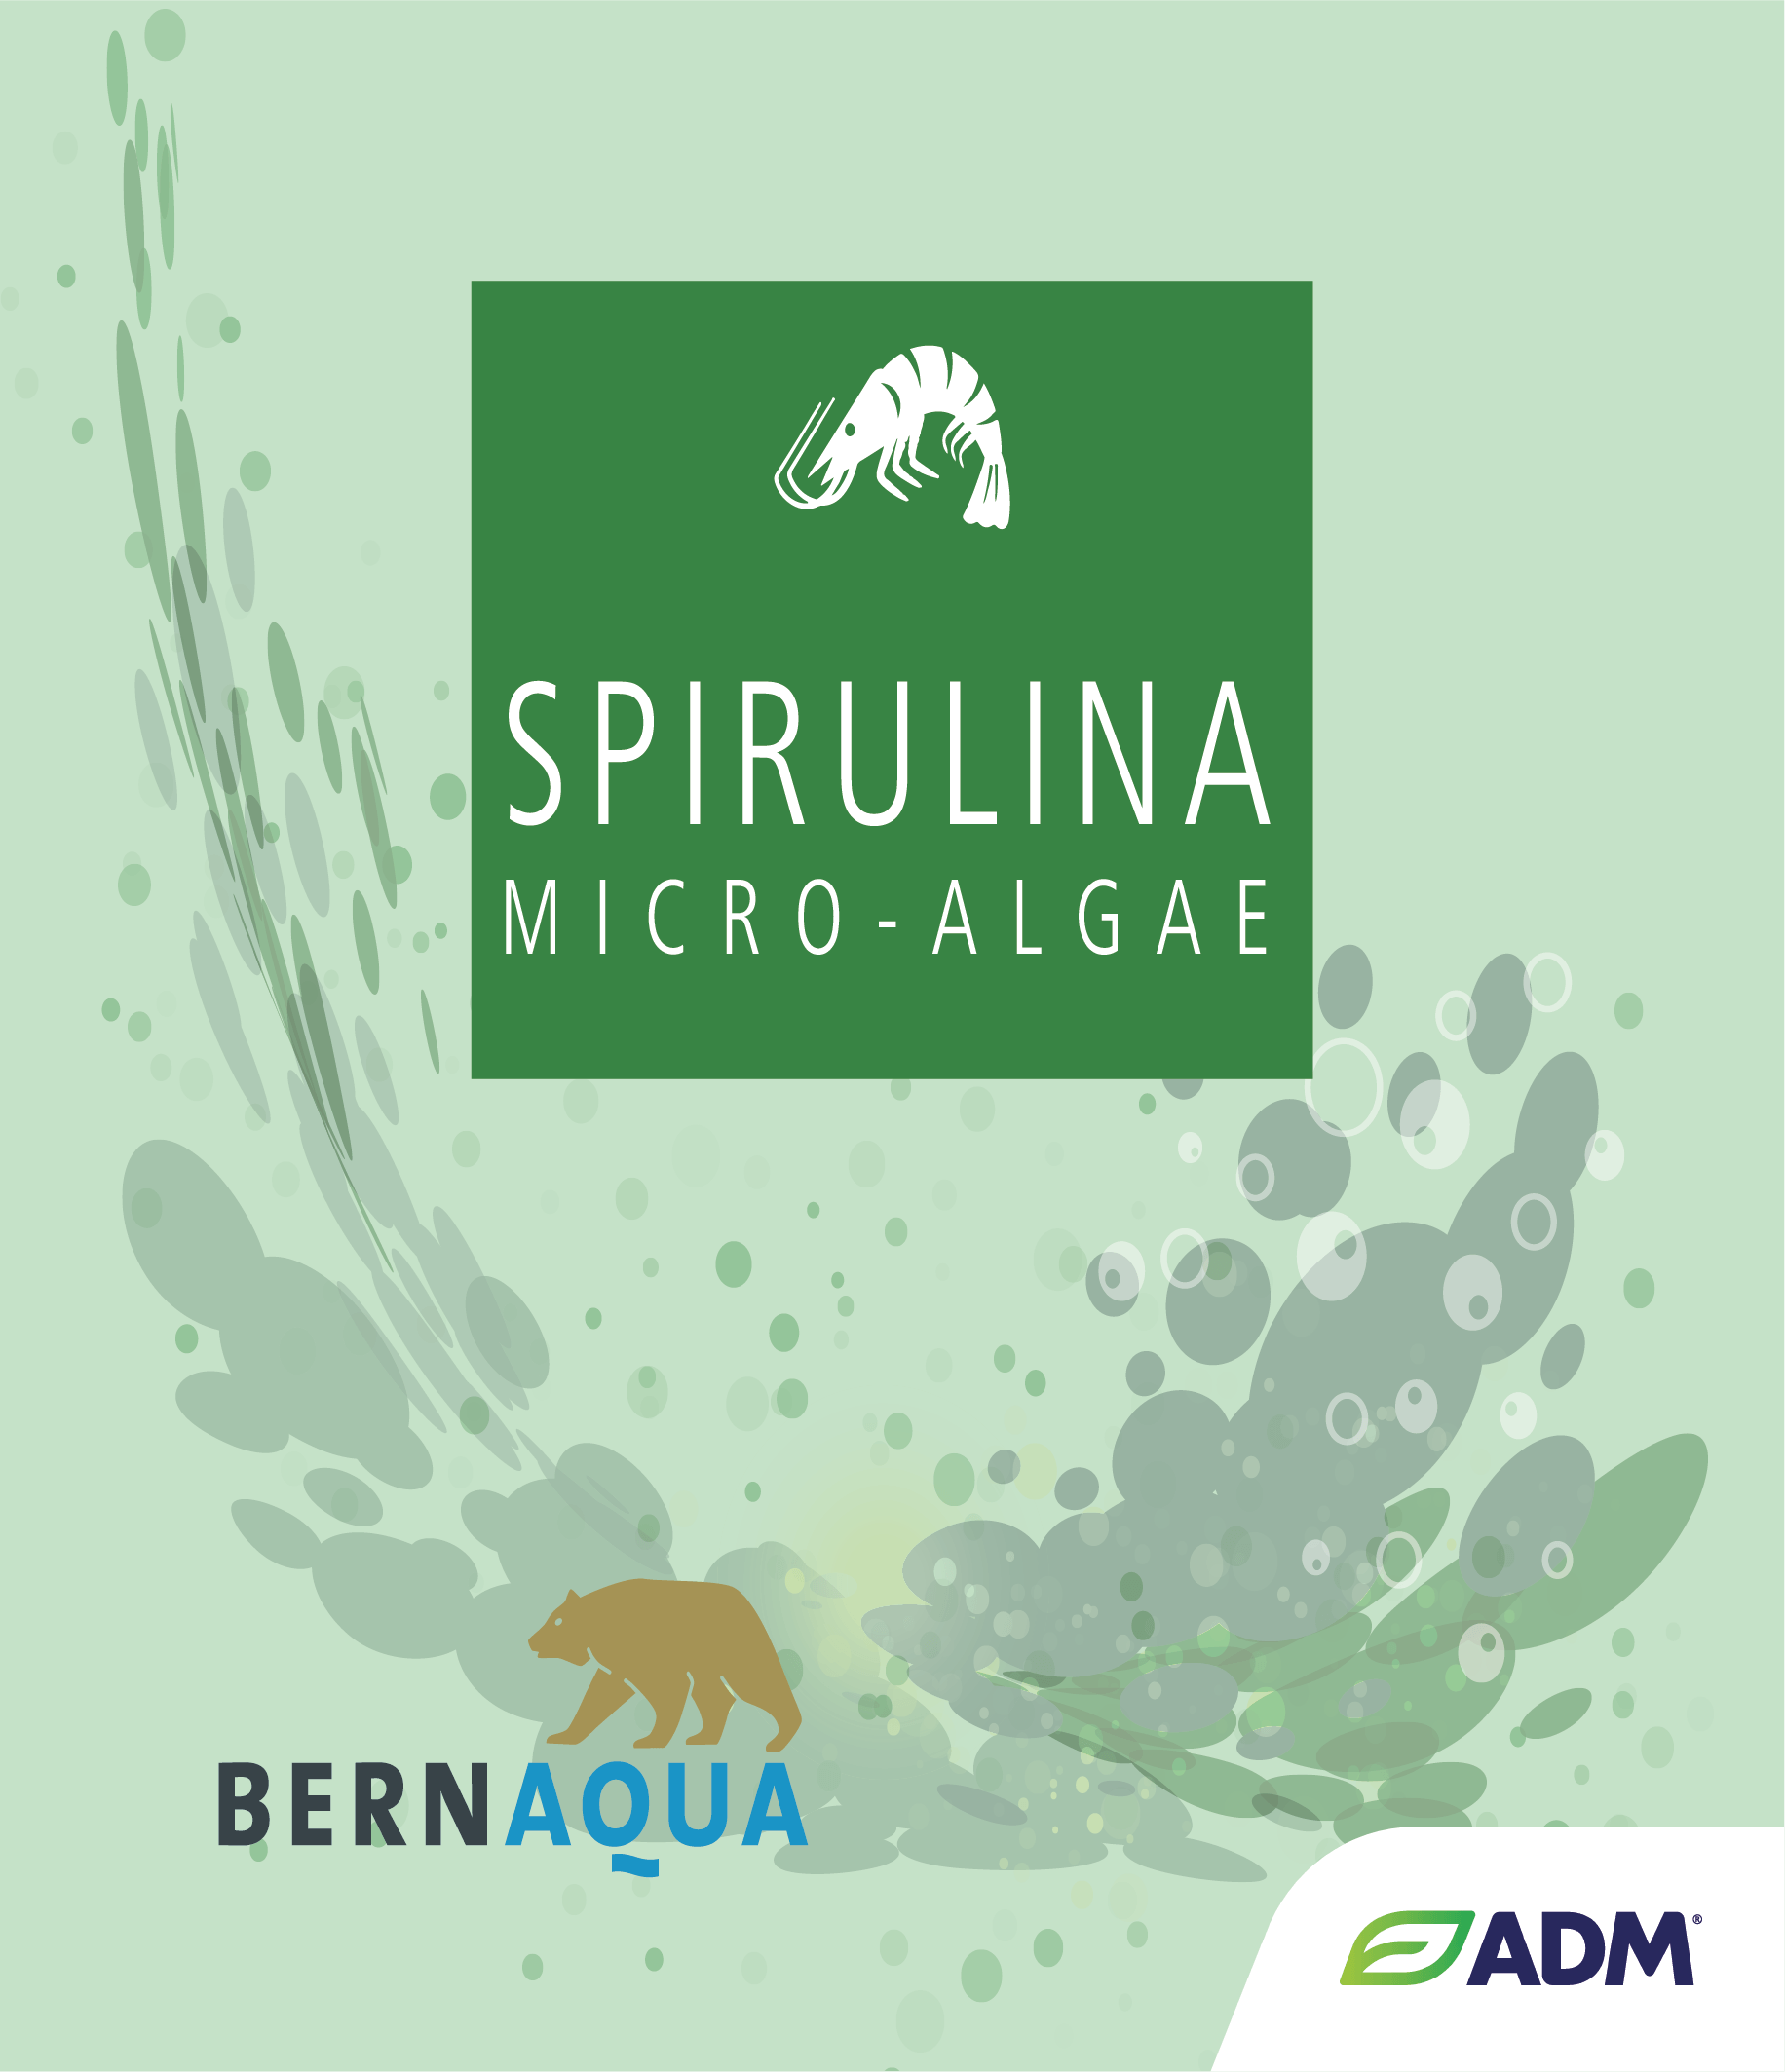 Spirulina by BernAqua